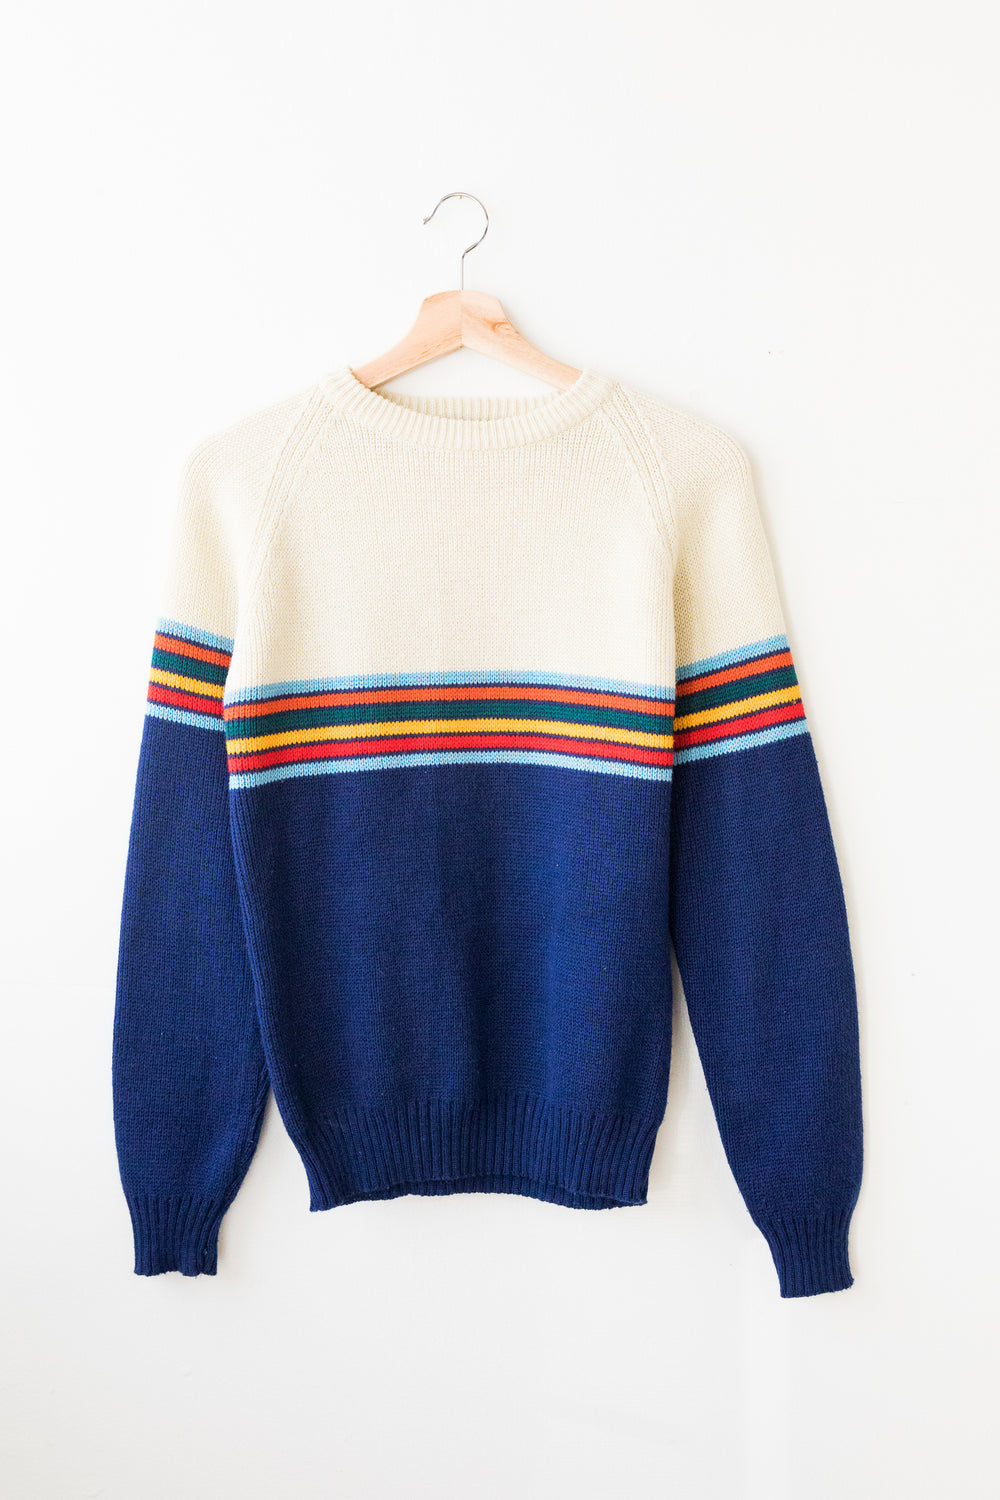 Buffums Rainbow Sweater